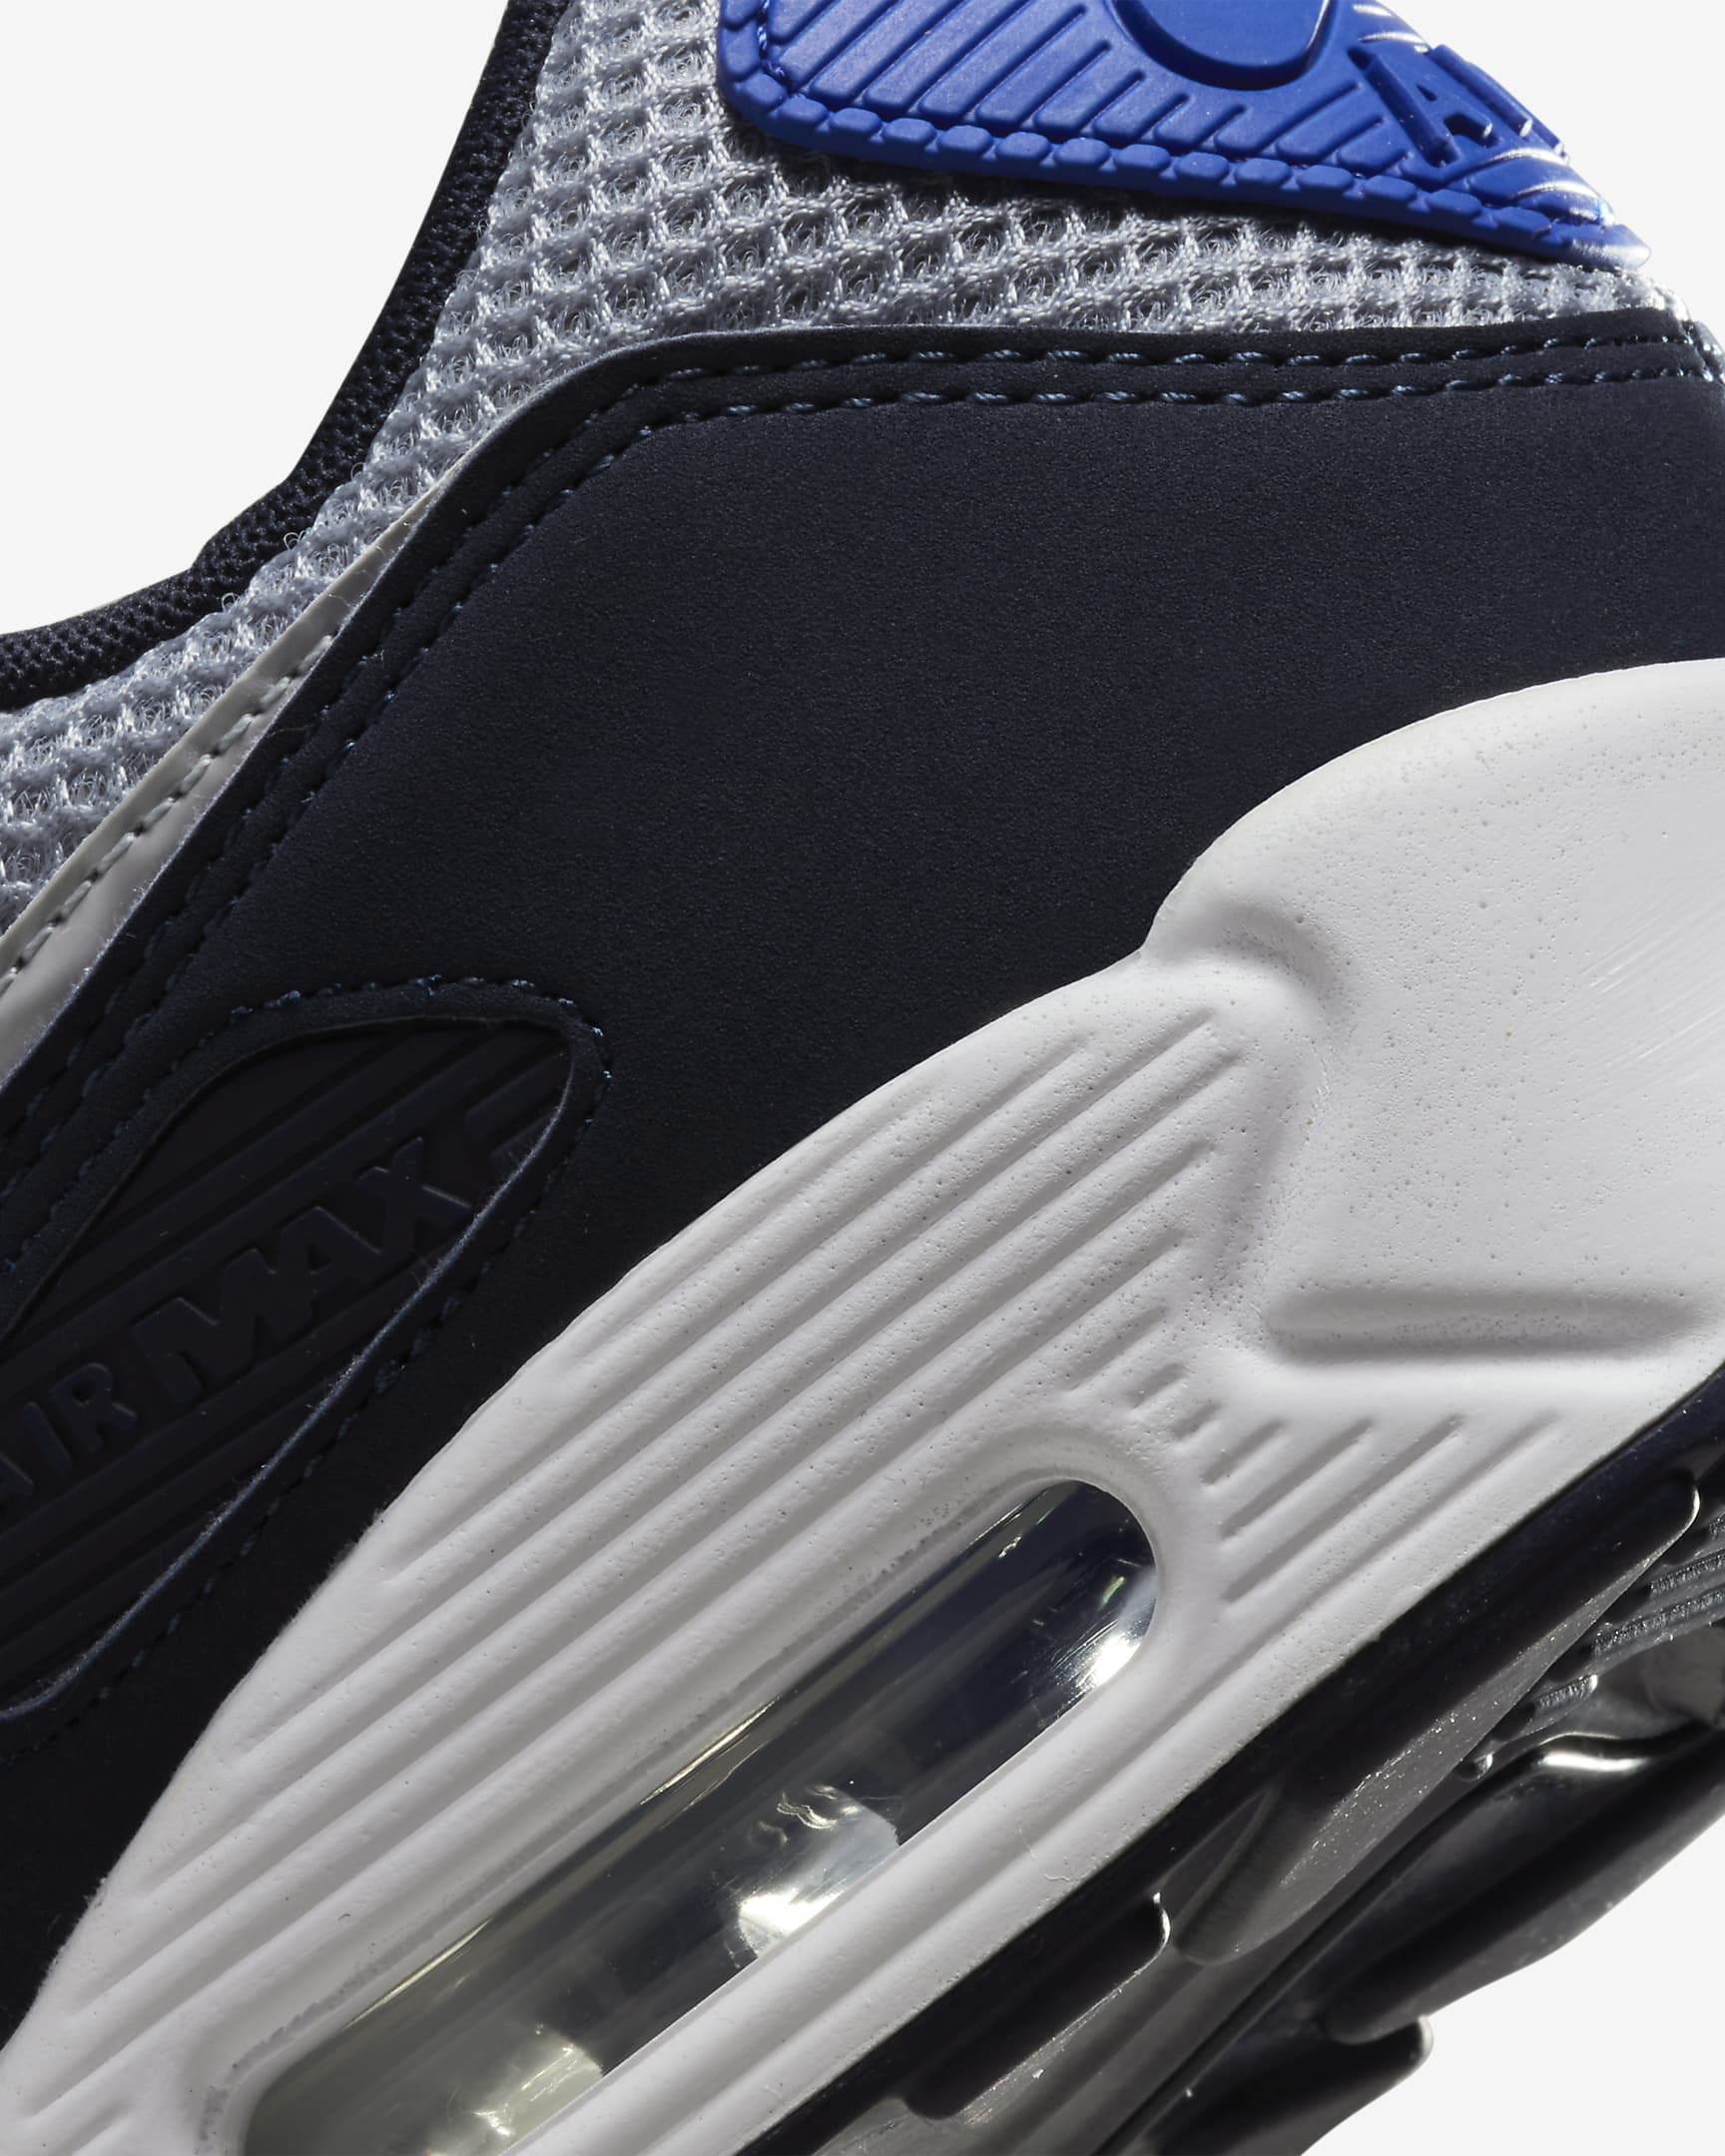 Nike Air Max 90 SE Men's Shoes - Midnight Navy/Obsidian/Ashen Slate/Metallic Platinum